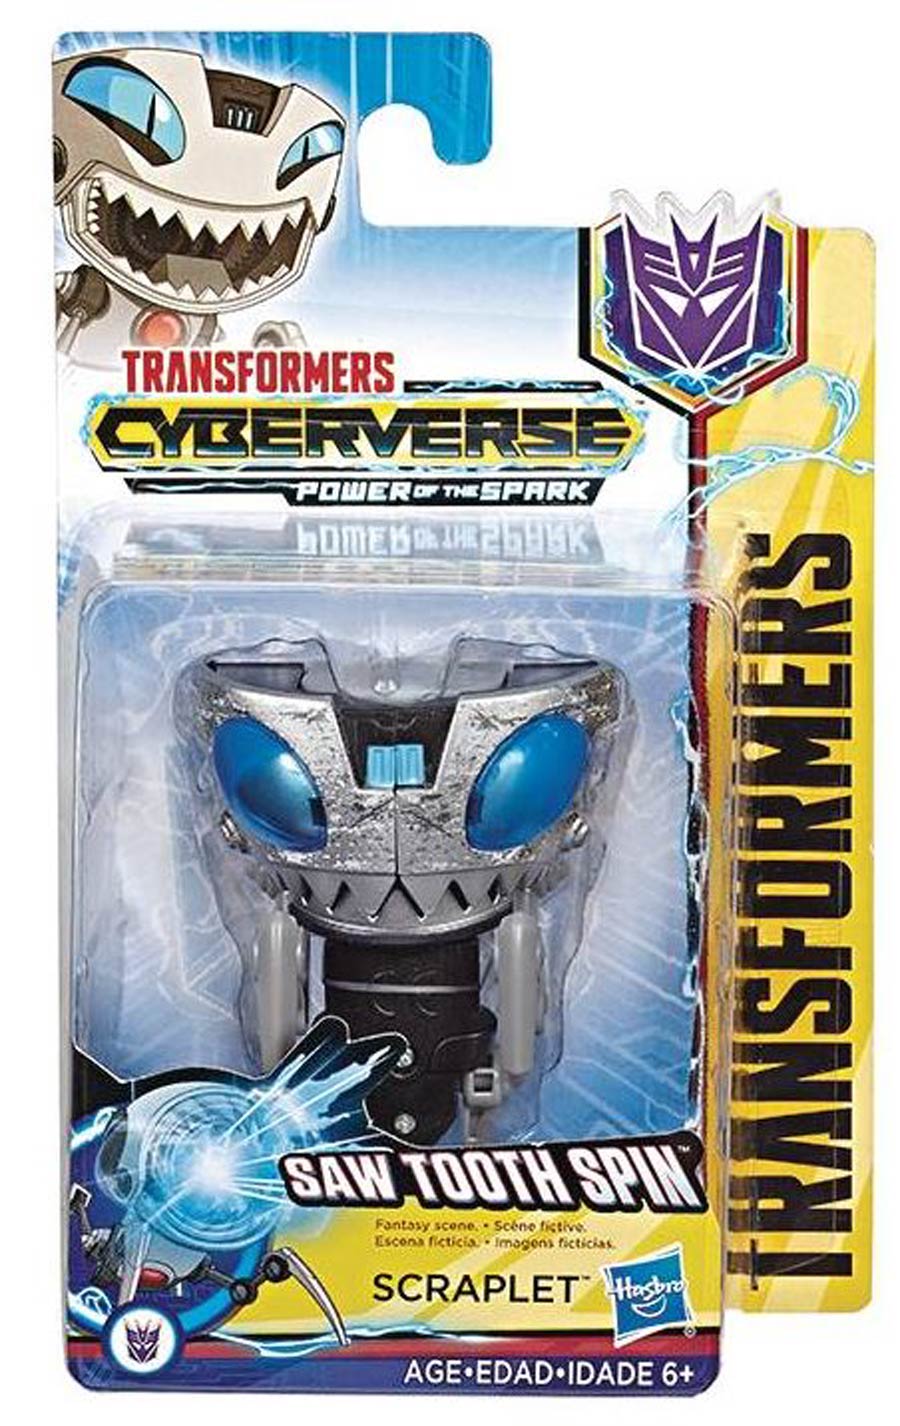 Transformers Cyberverse Scout Action Figure Assortment 201903 - Scraplet